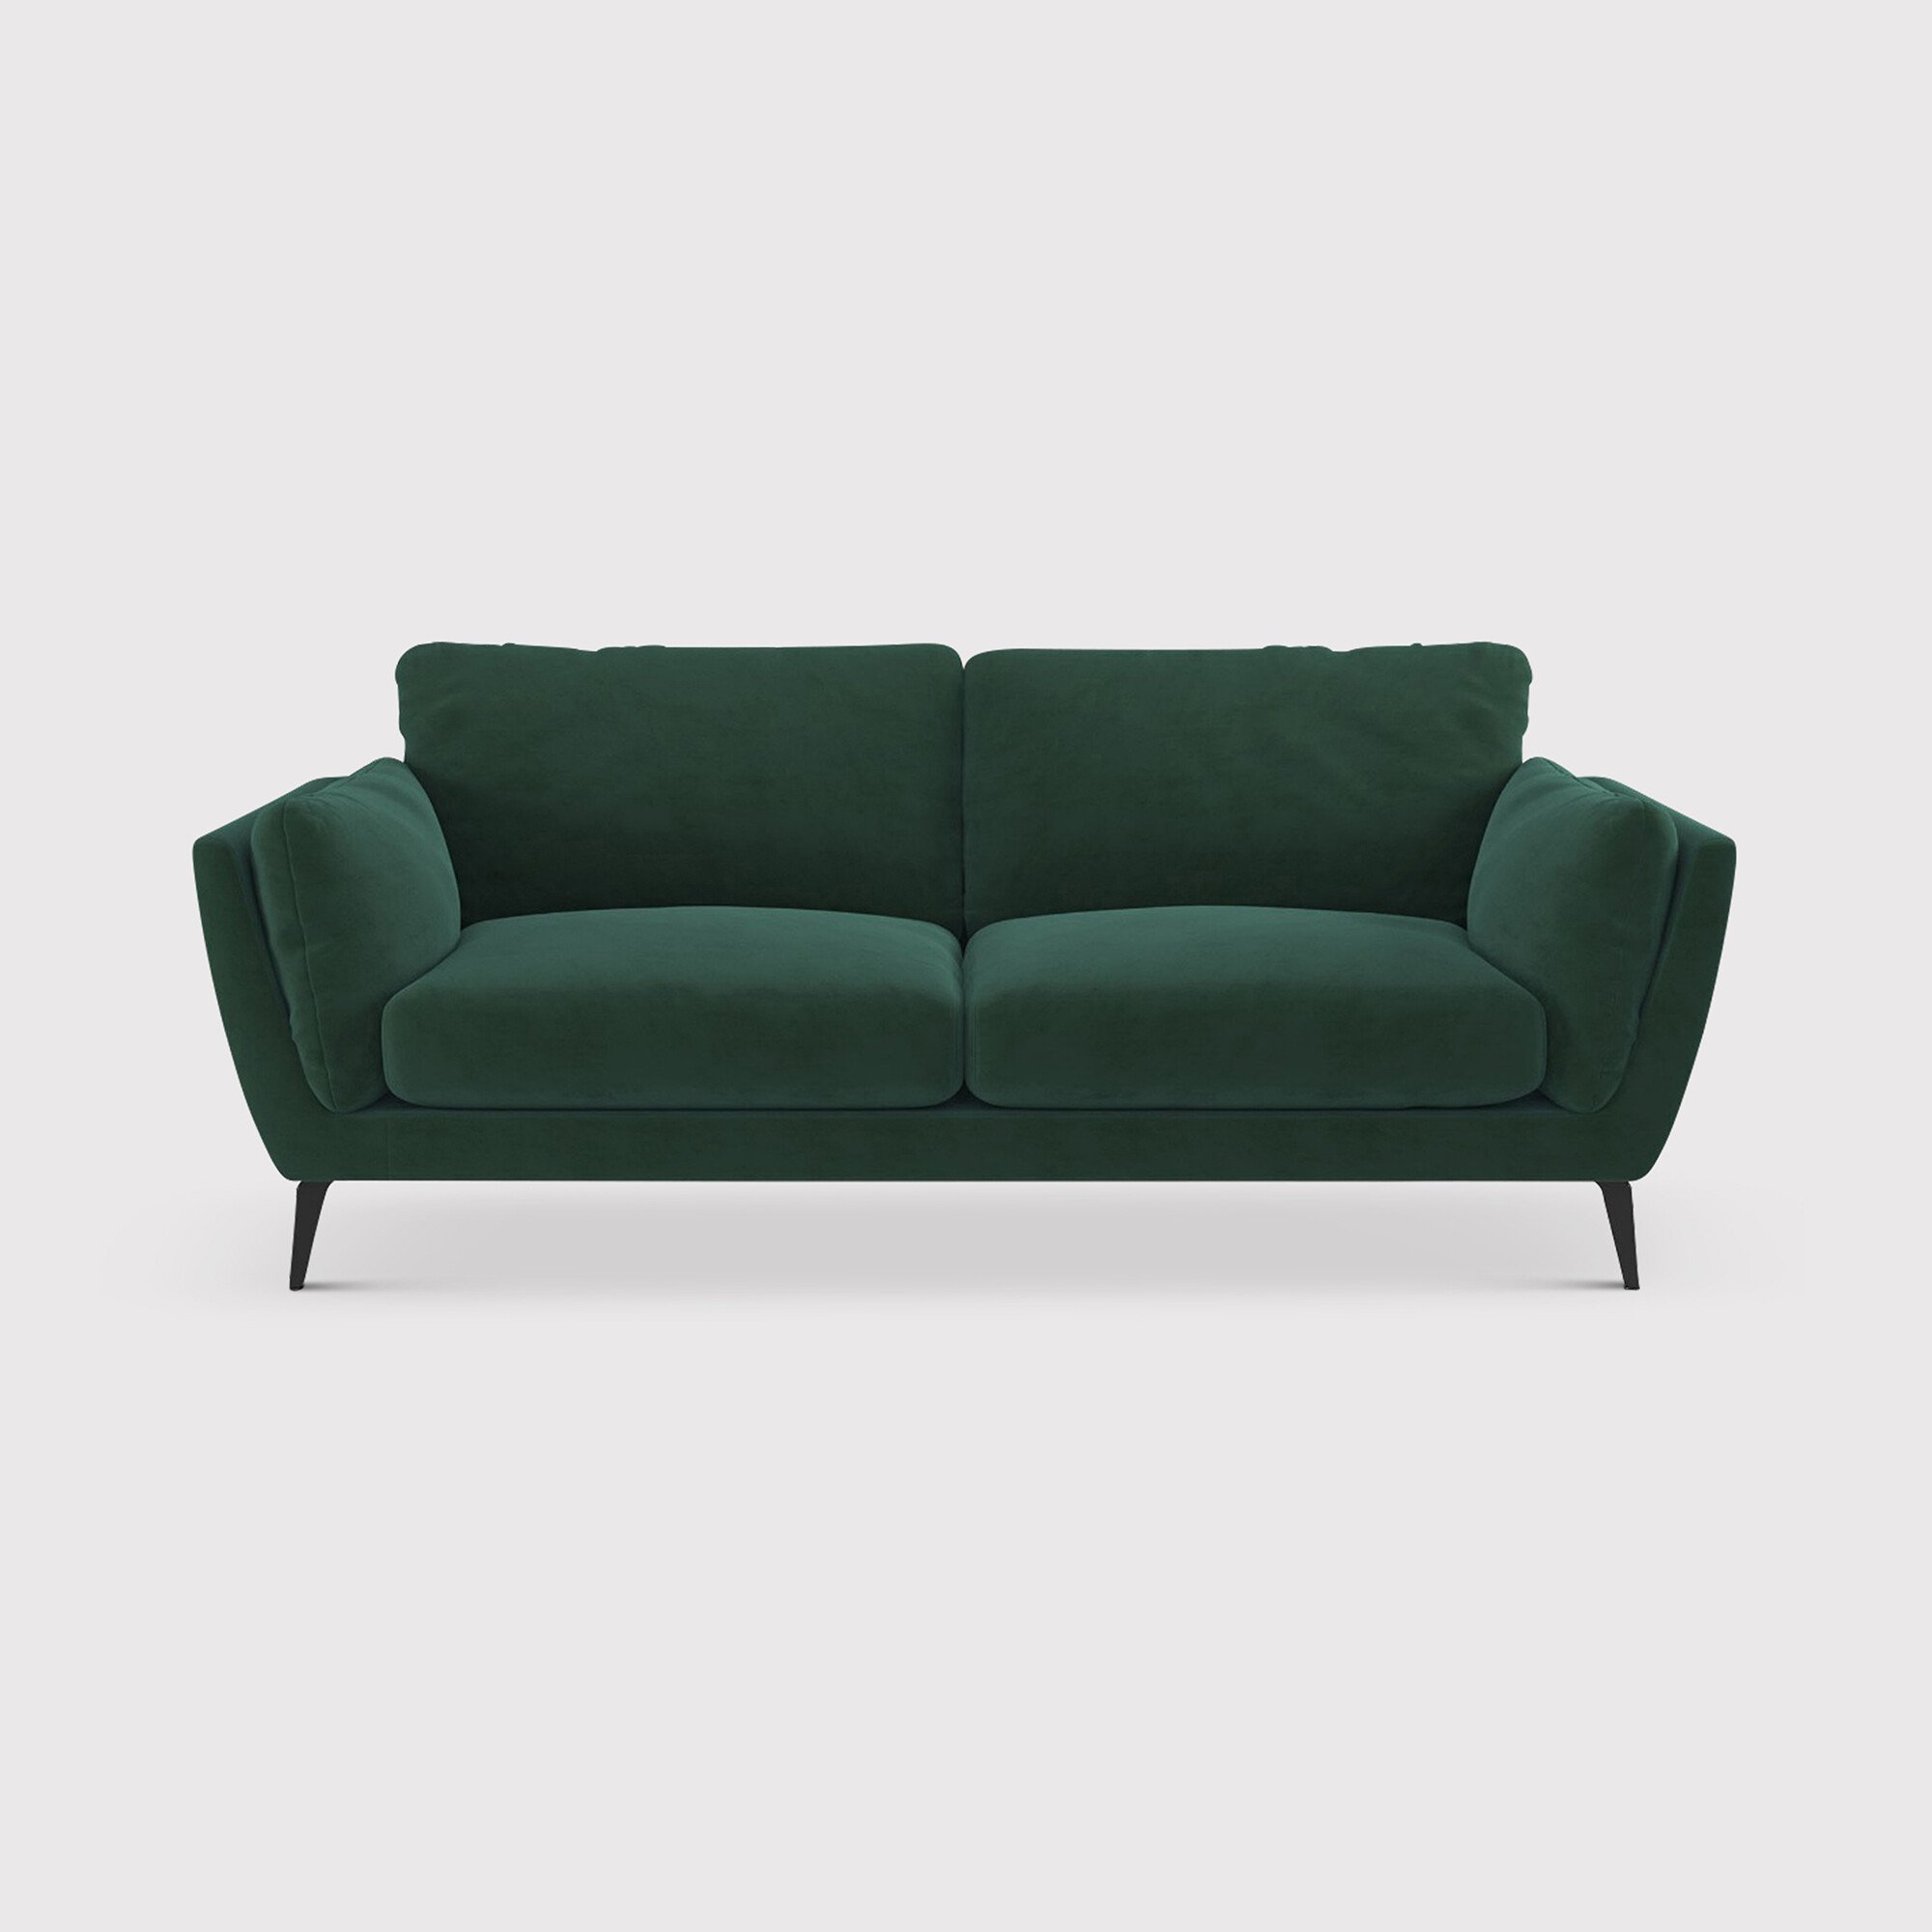 Boone 3 Seater Sofa, Green Fabric | Barker & Stonehouse